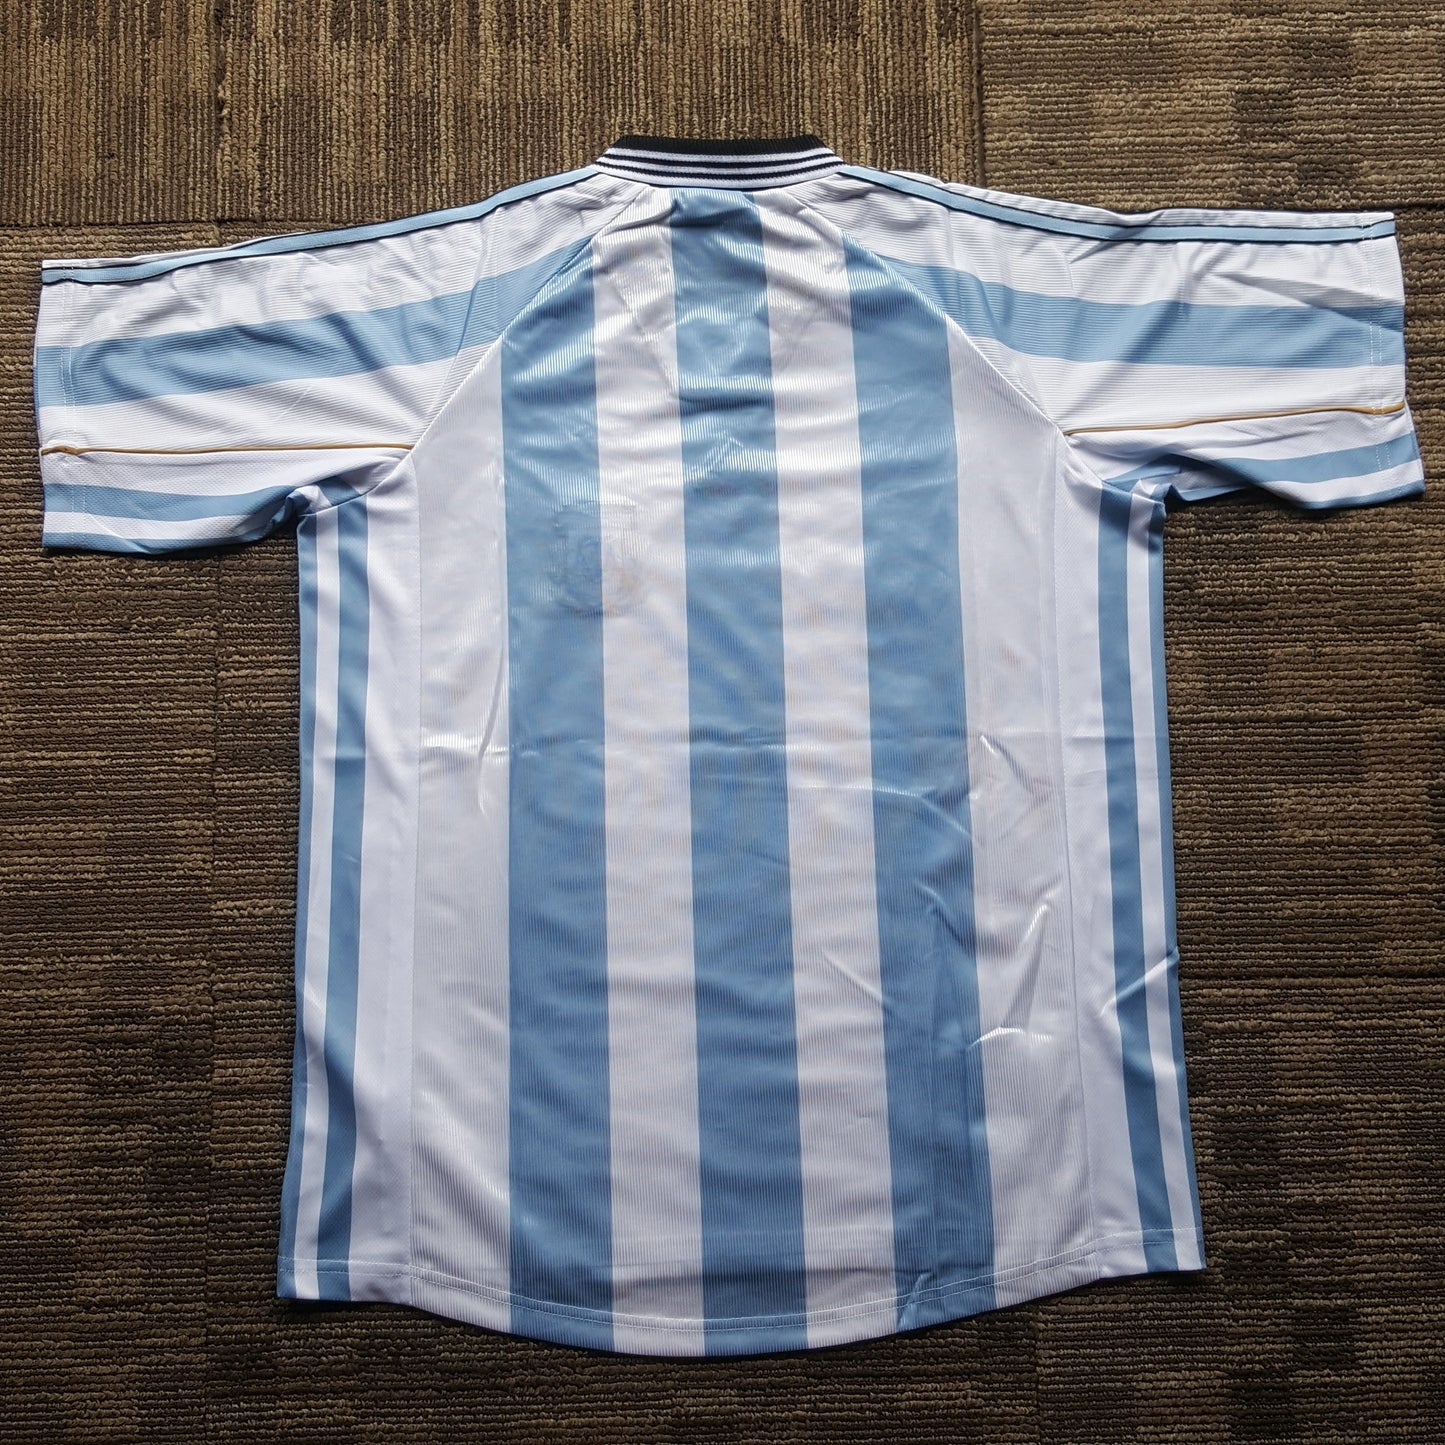 1998 Argentina Home Shirt - ClassicFootballJersey